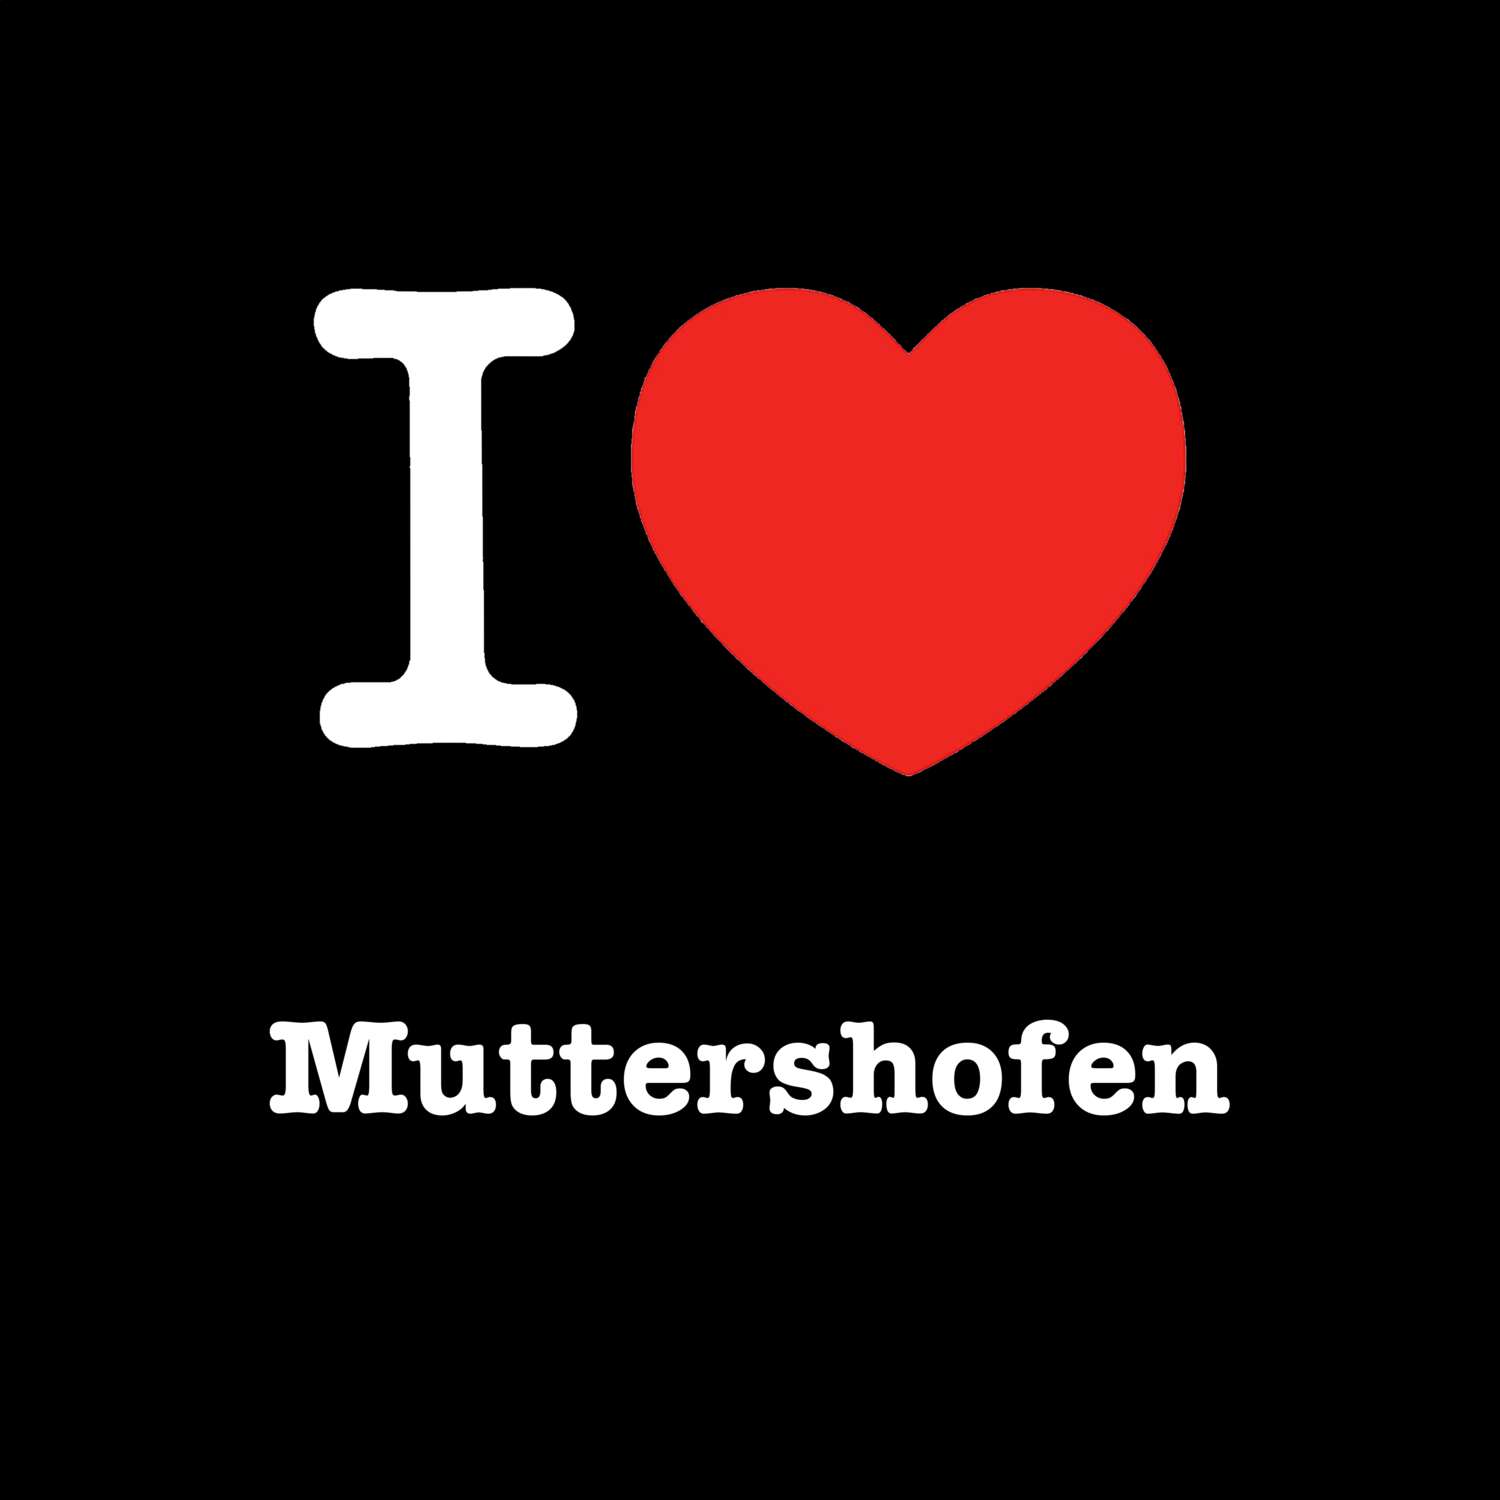 Muttershofen T-Shirt »I love«